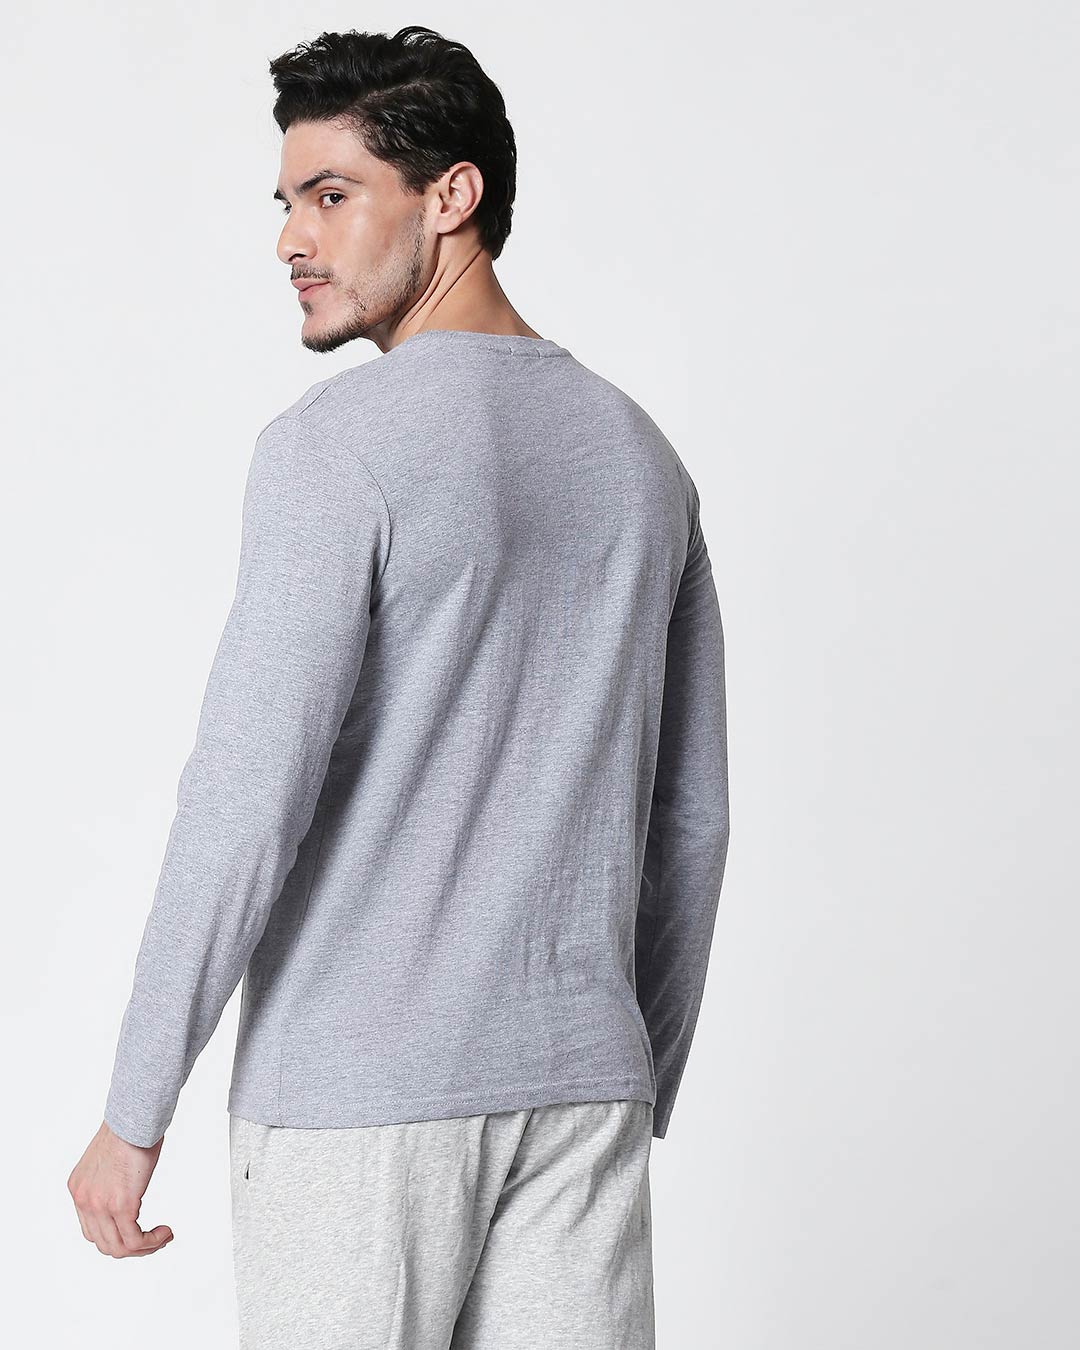 Shop Legend 7 Net Full Sleeve T-Shirt Space Grey-Back